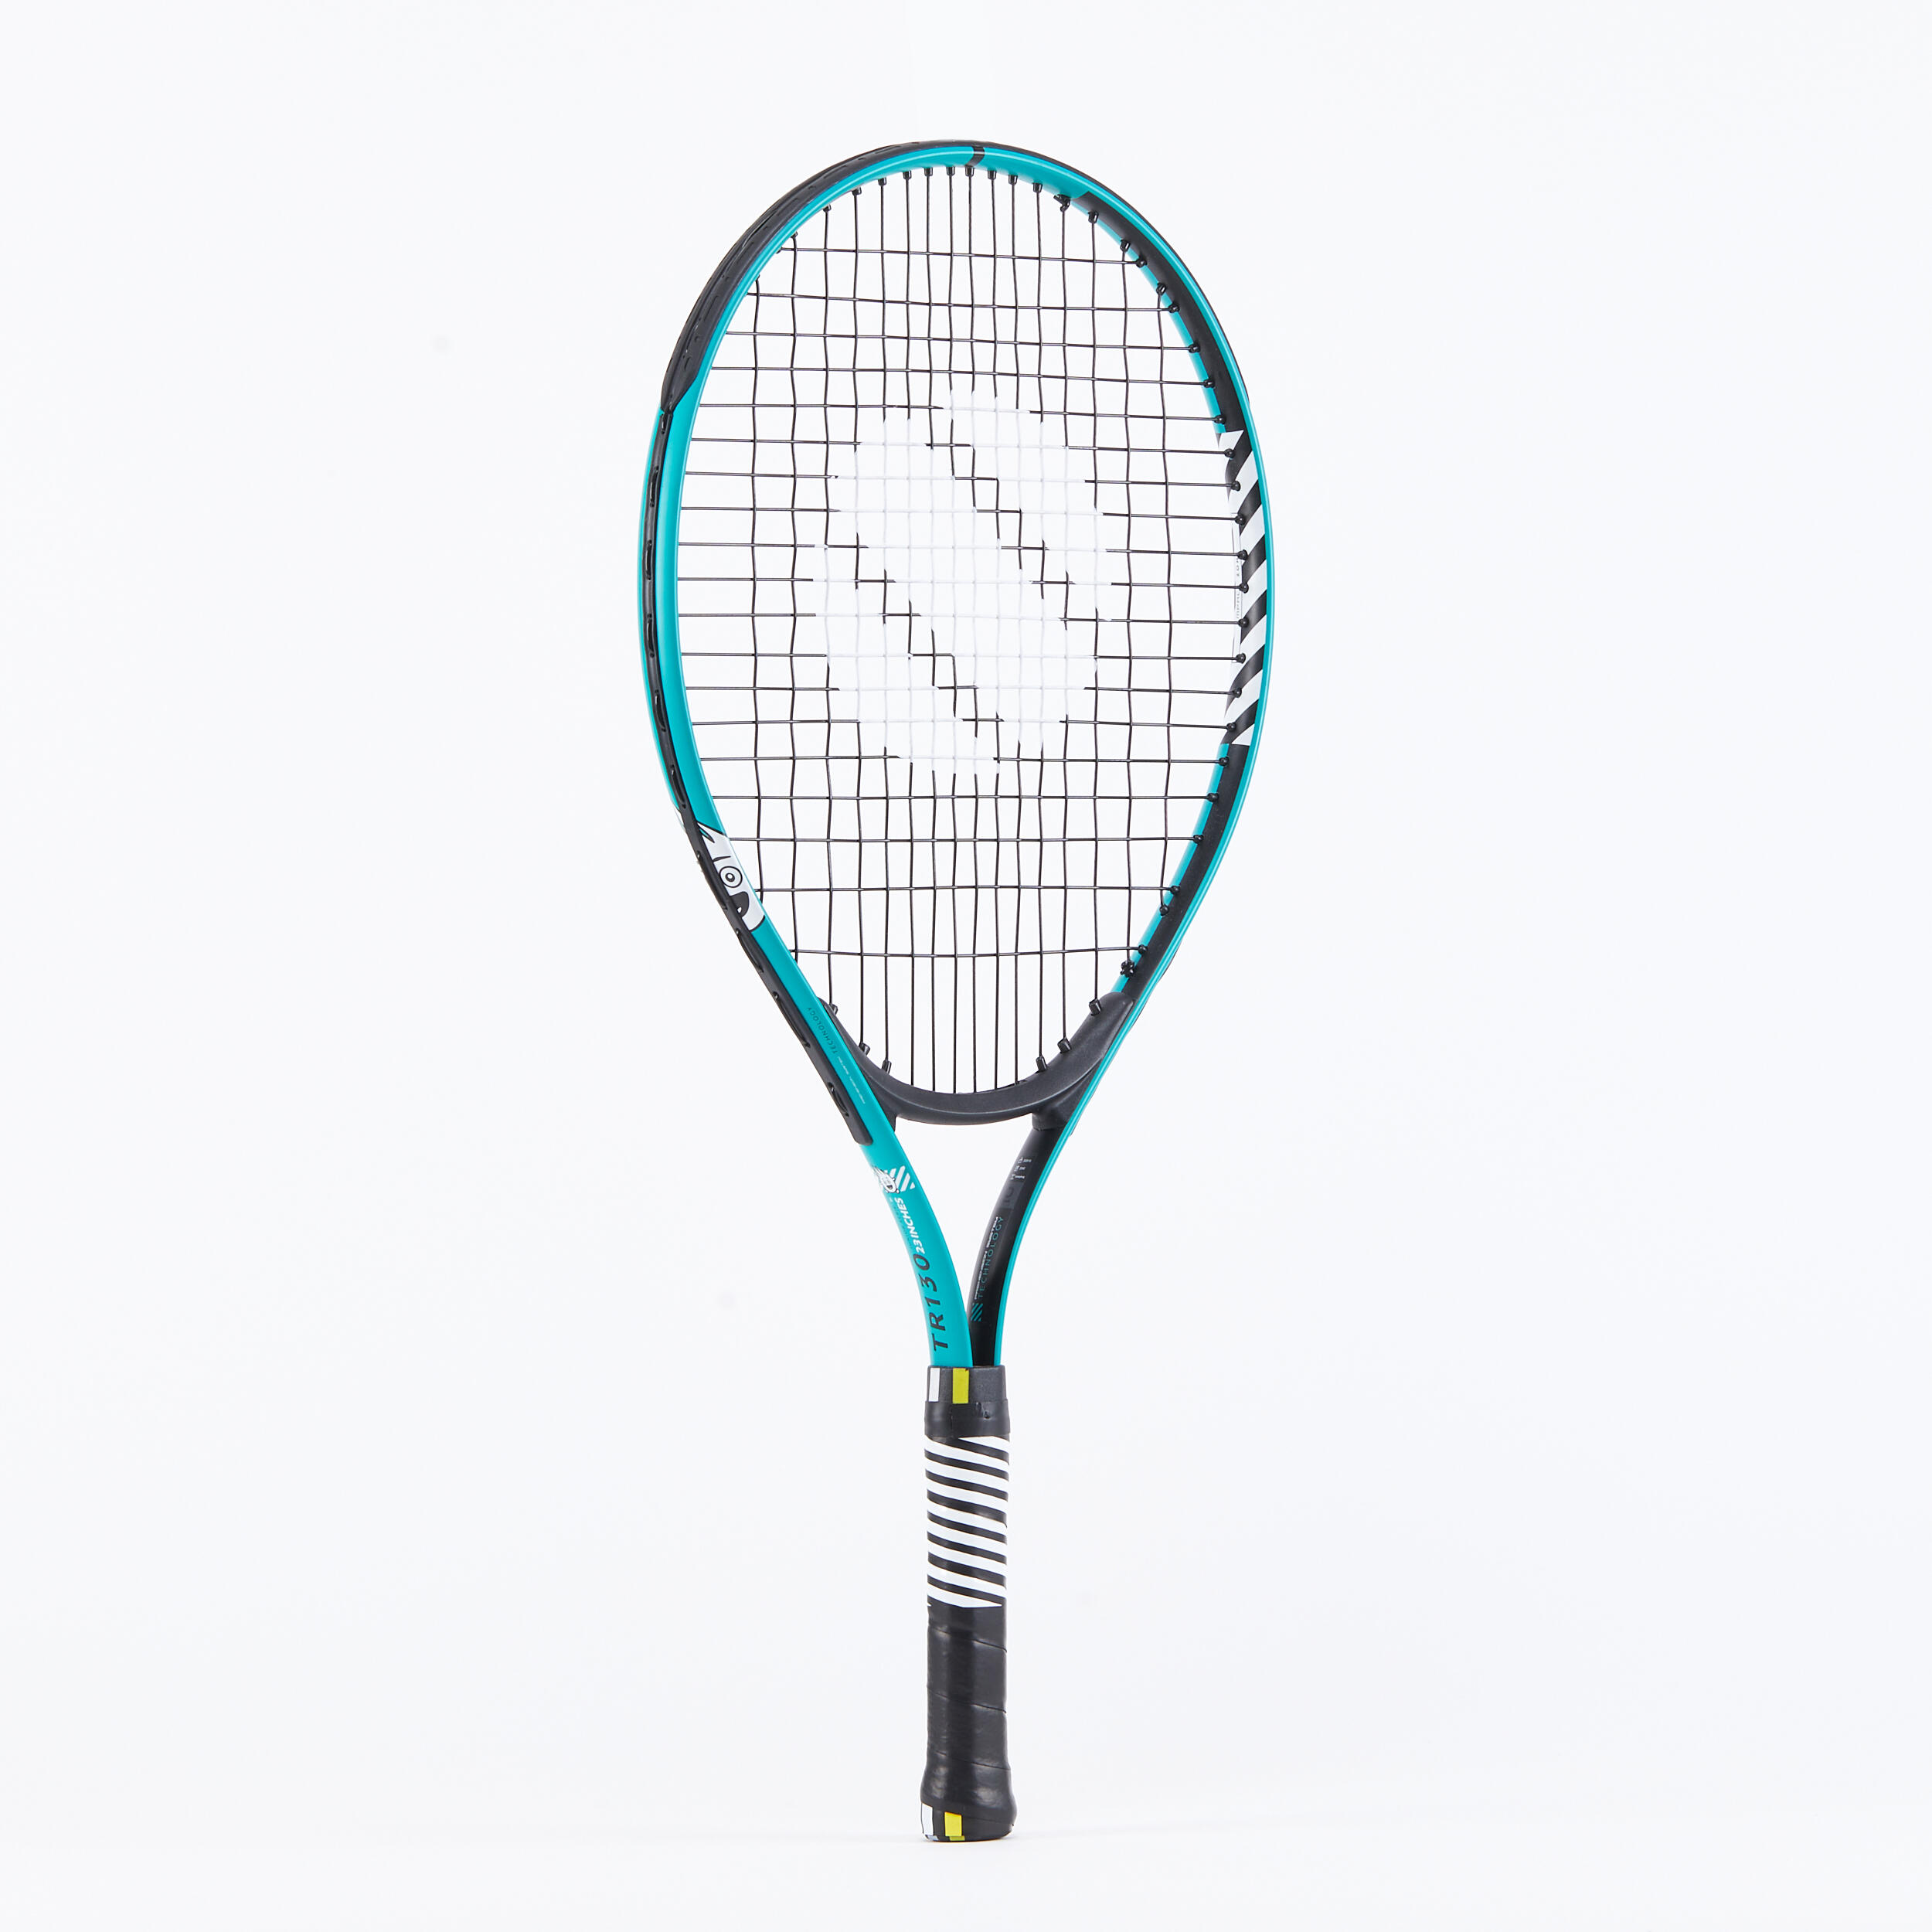 Kids' Tennis Racket 219g - TR 130 Blue - ARTENGO